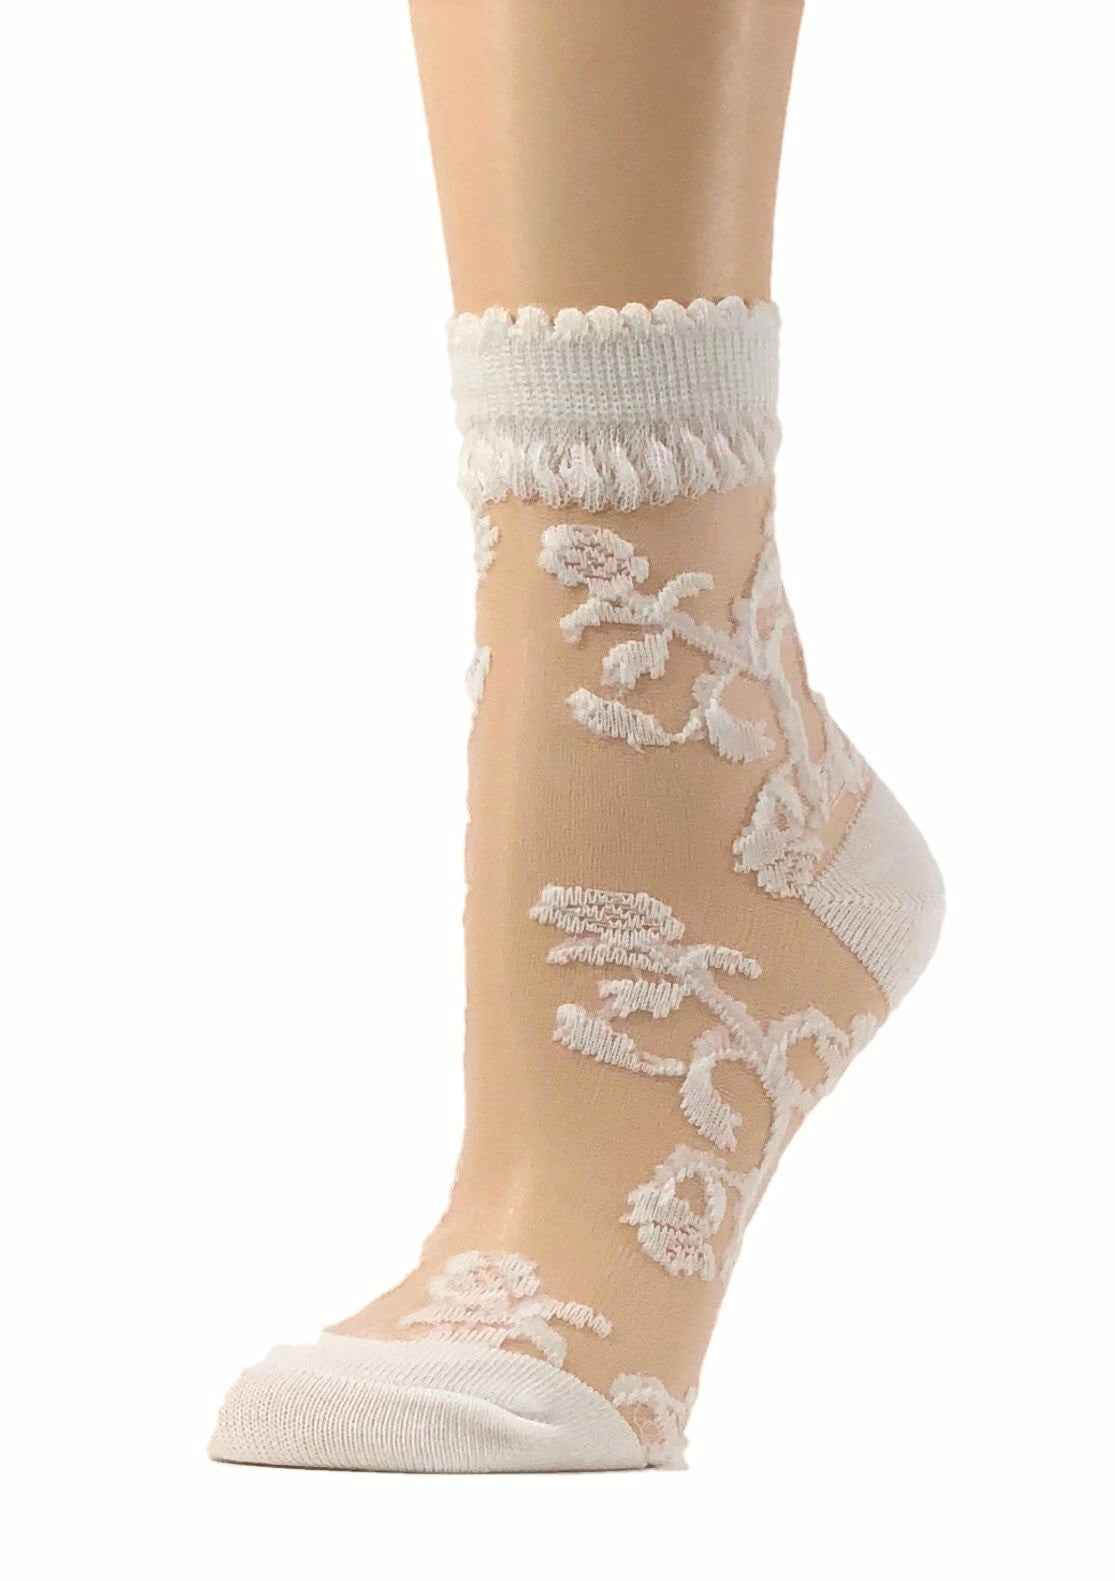 Snazzy White Sheer Socks - Global Trendz Fashion®